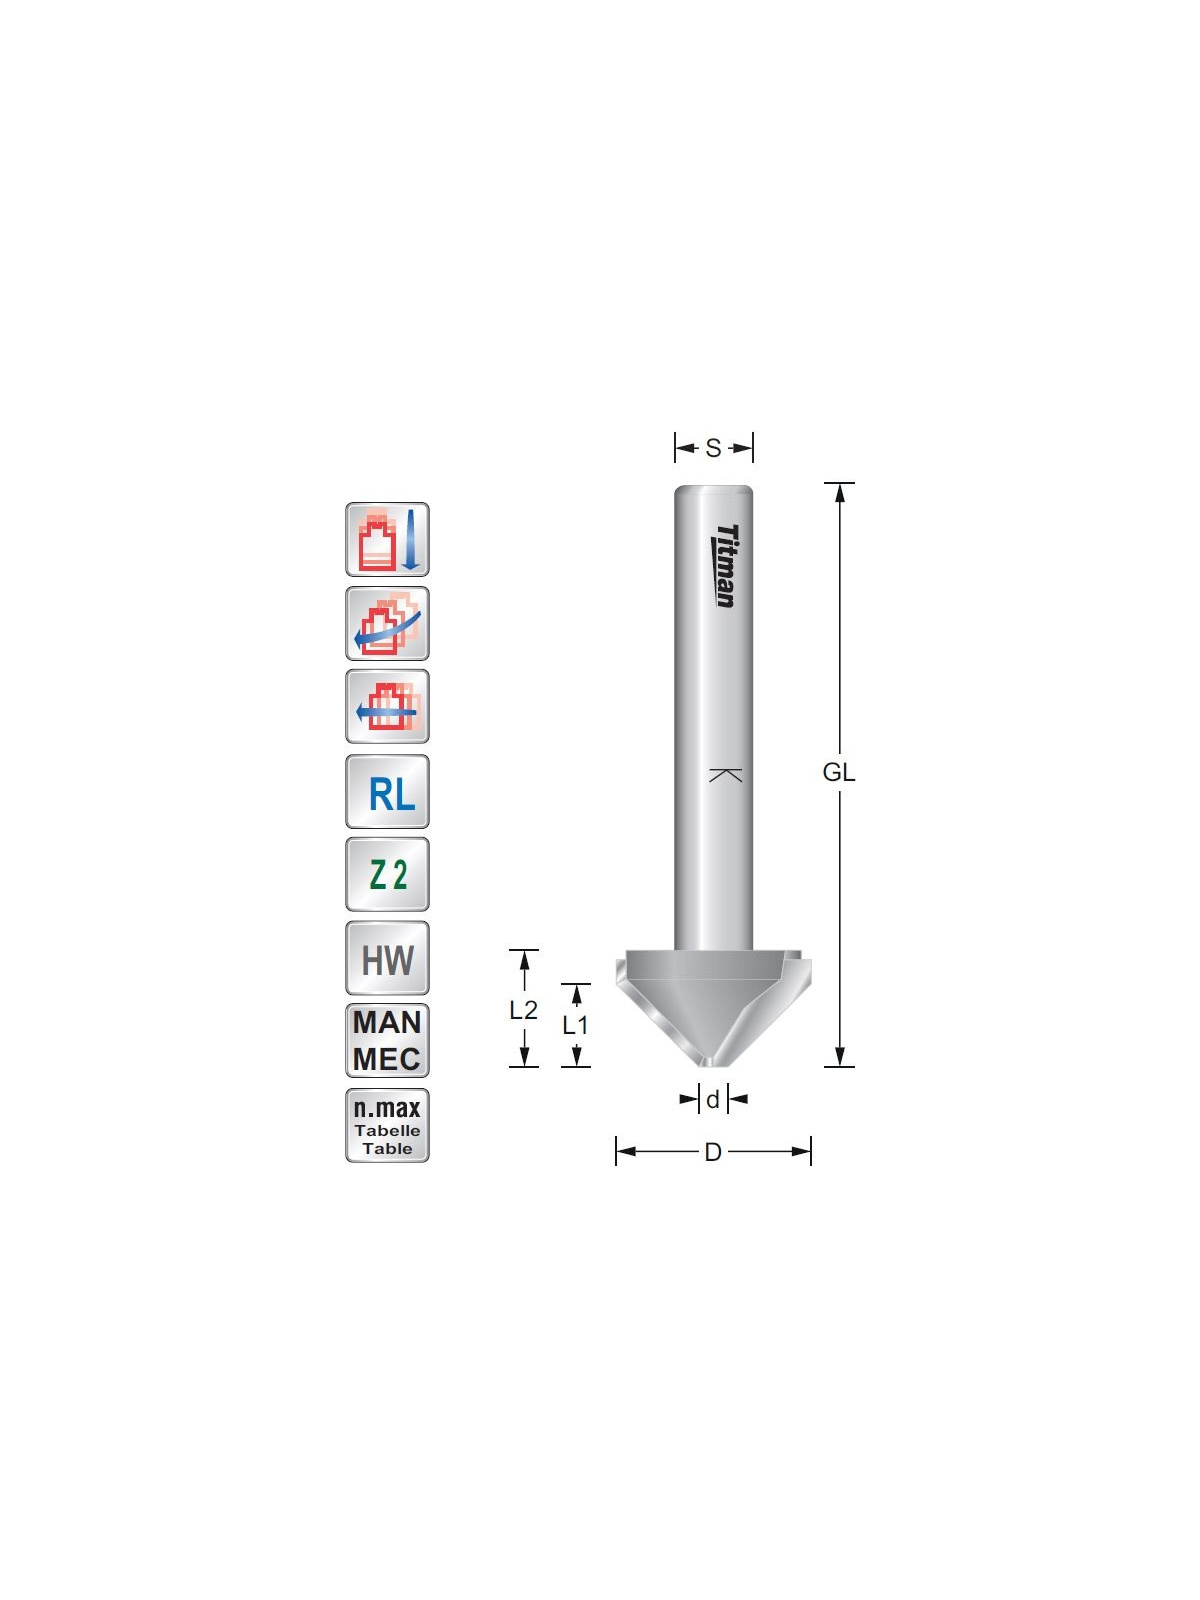 Titman V-Nutfräser  135°  S8mm für ALUCOBOND, DiBOND, REYNOBOND usw. | JVL-Europe